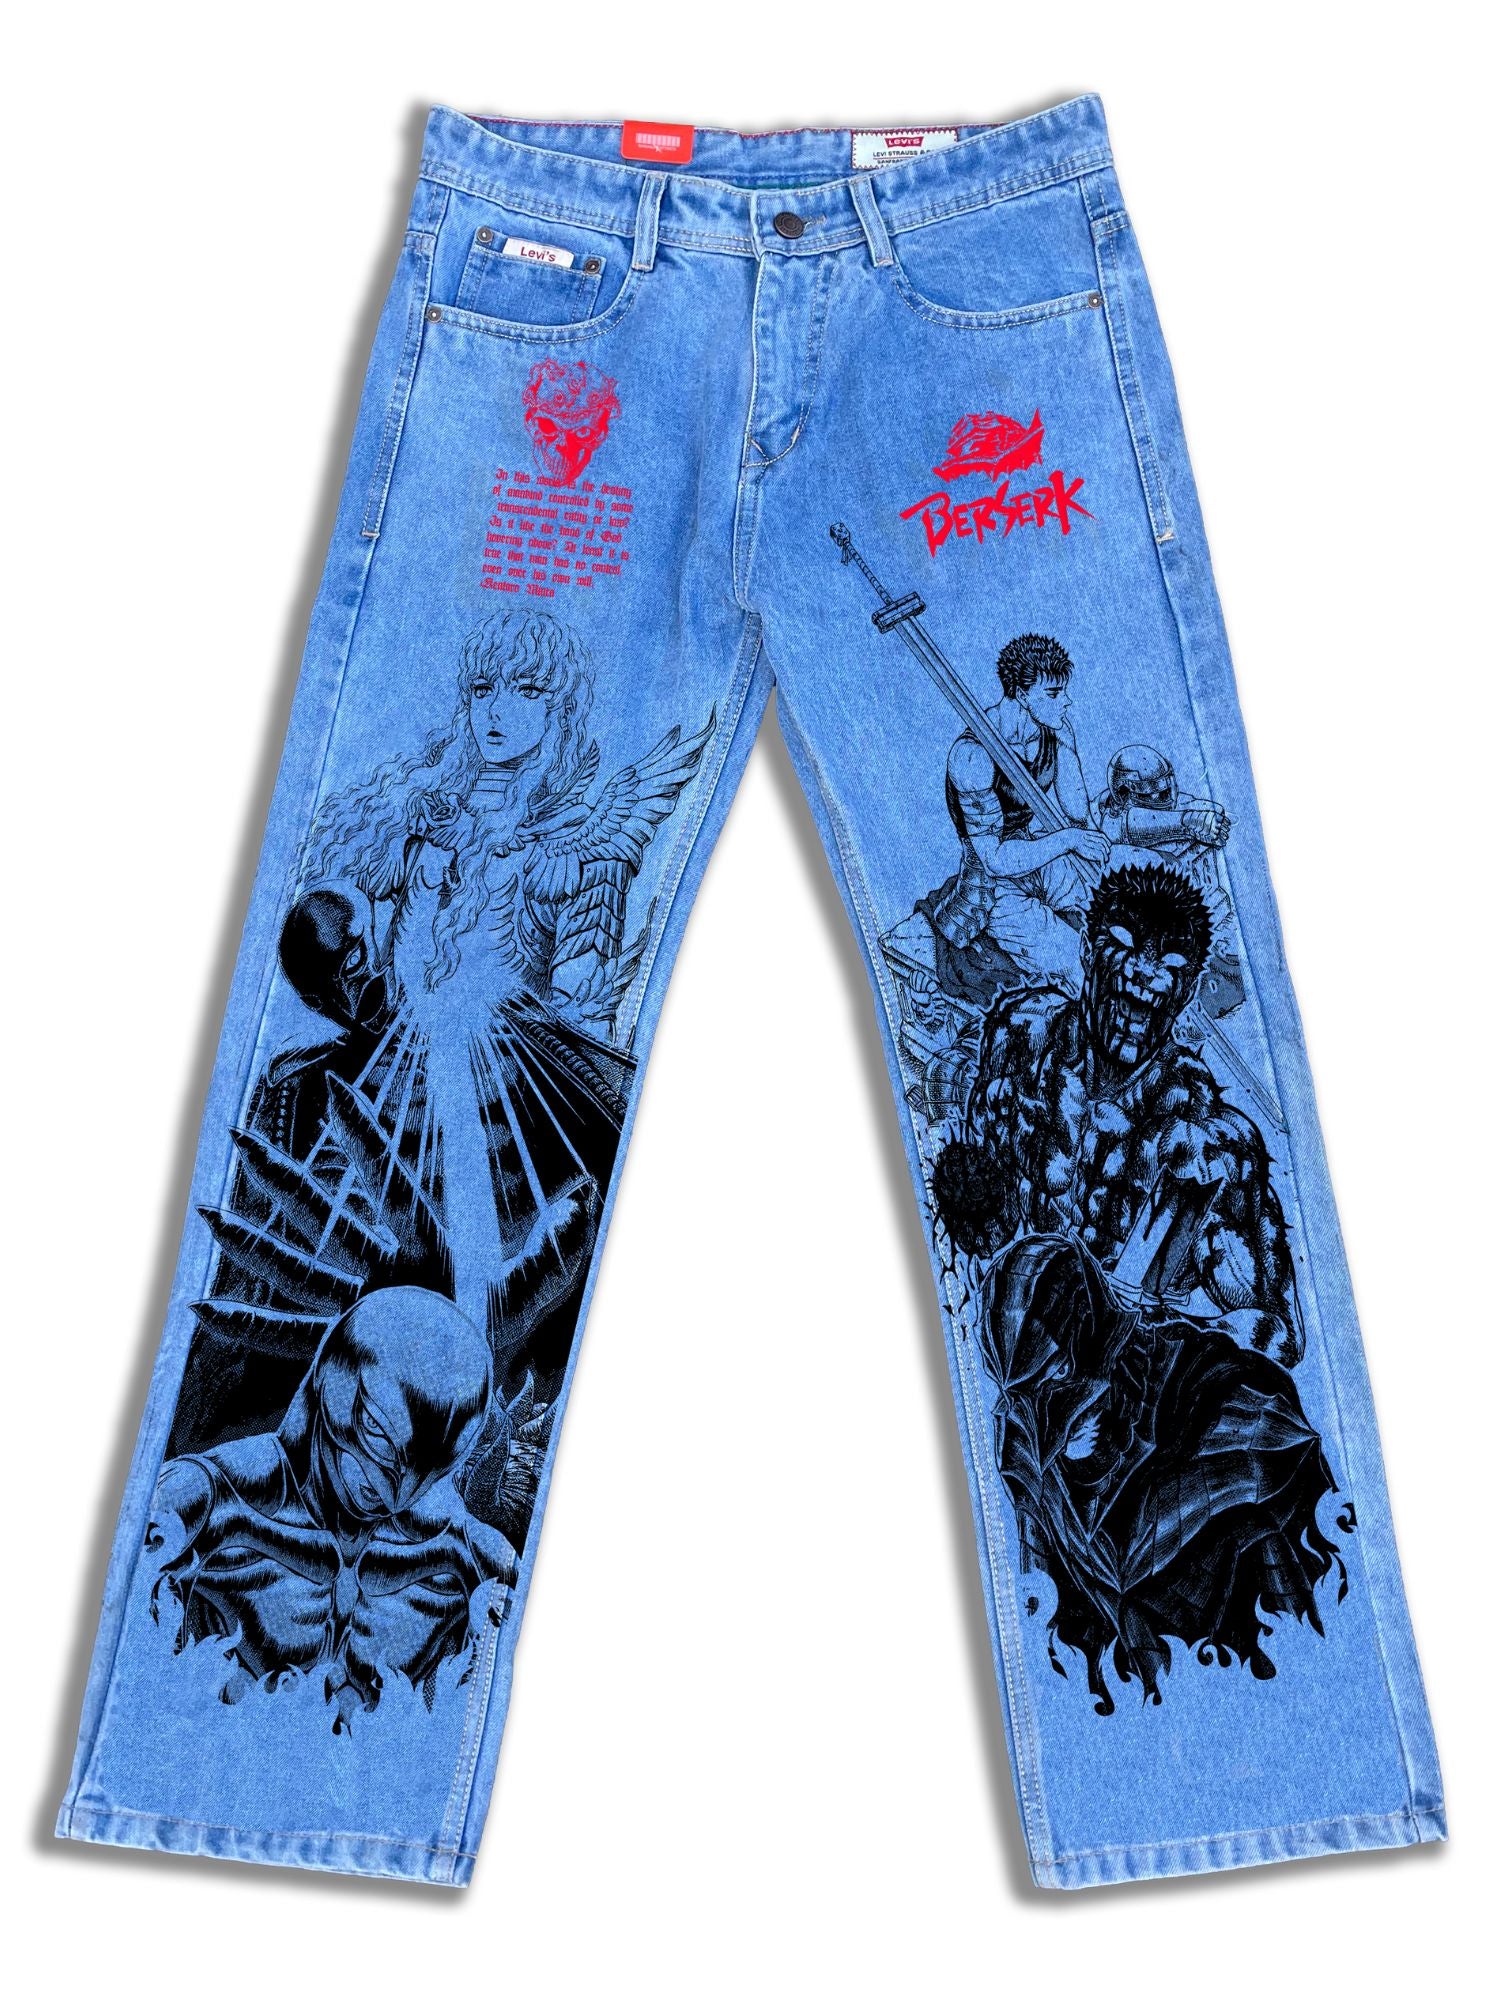 Guts x Griffith: Printed Berserk Blue Denim Jeans